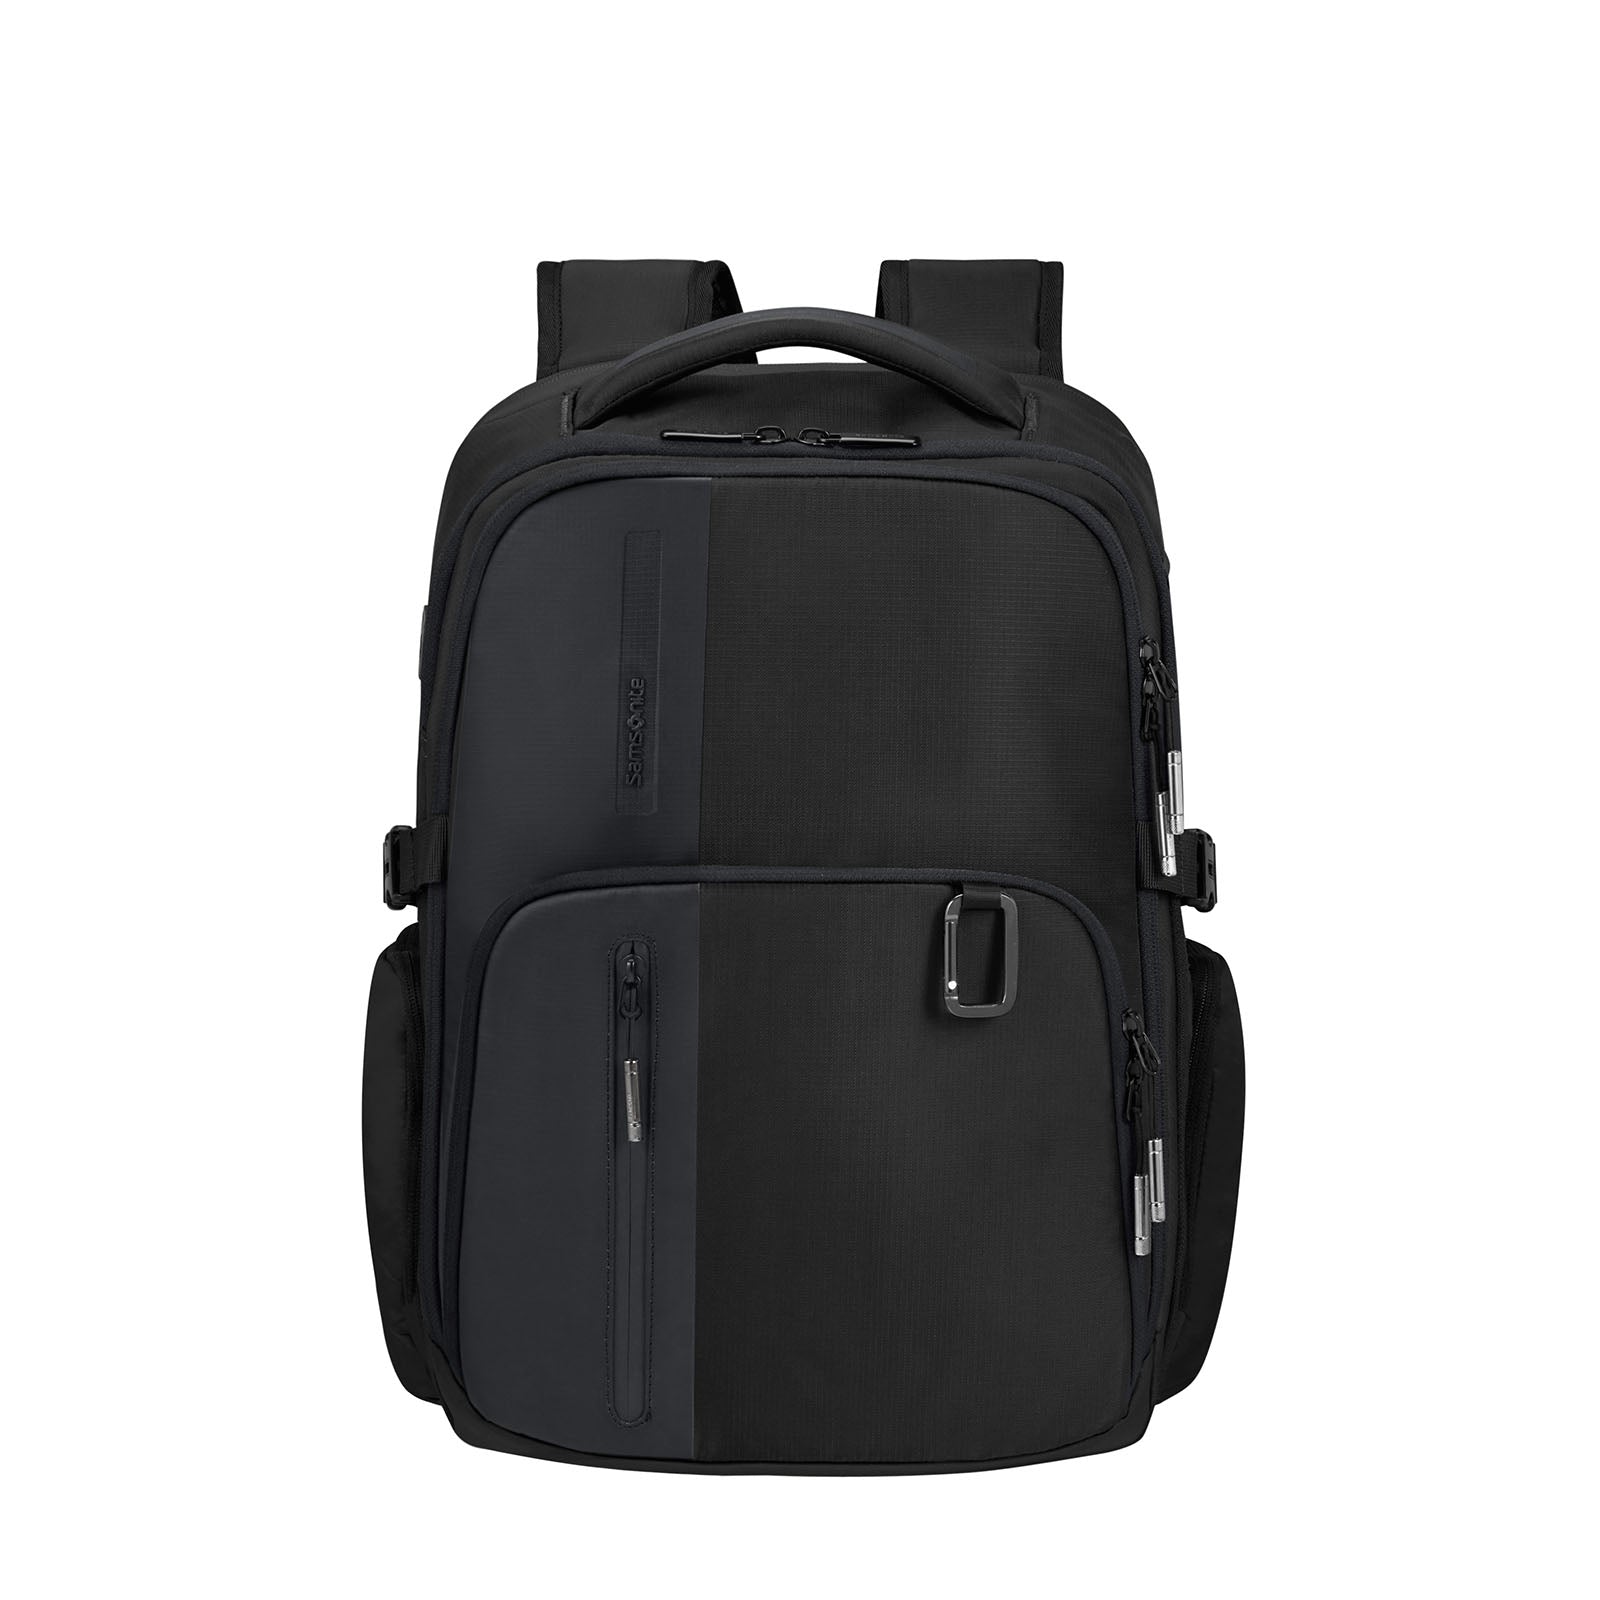 Samsonite-Biz2go-15-Inch-Laptop-Backpack-Black-Front